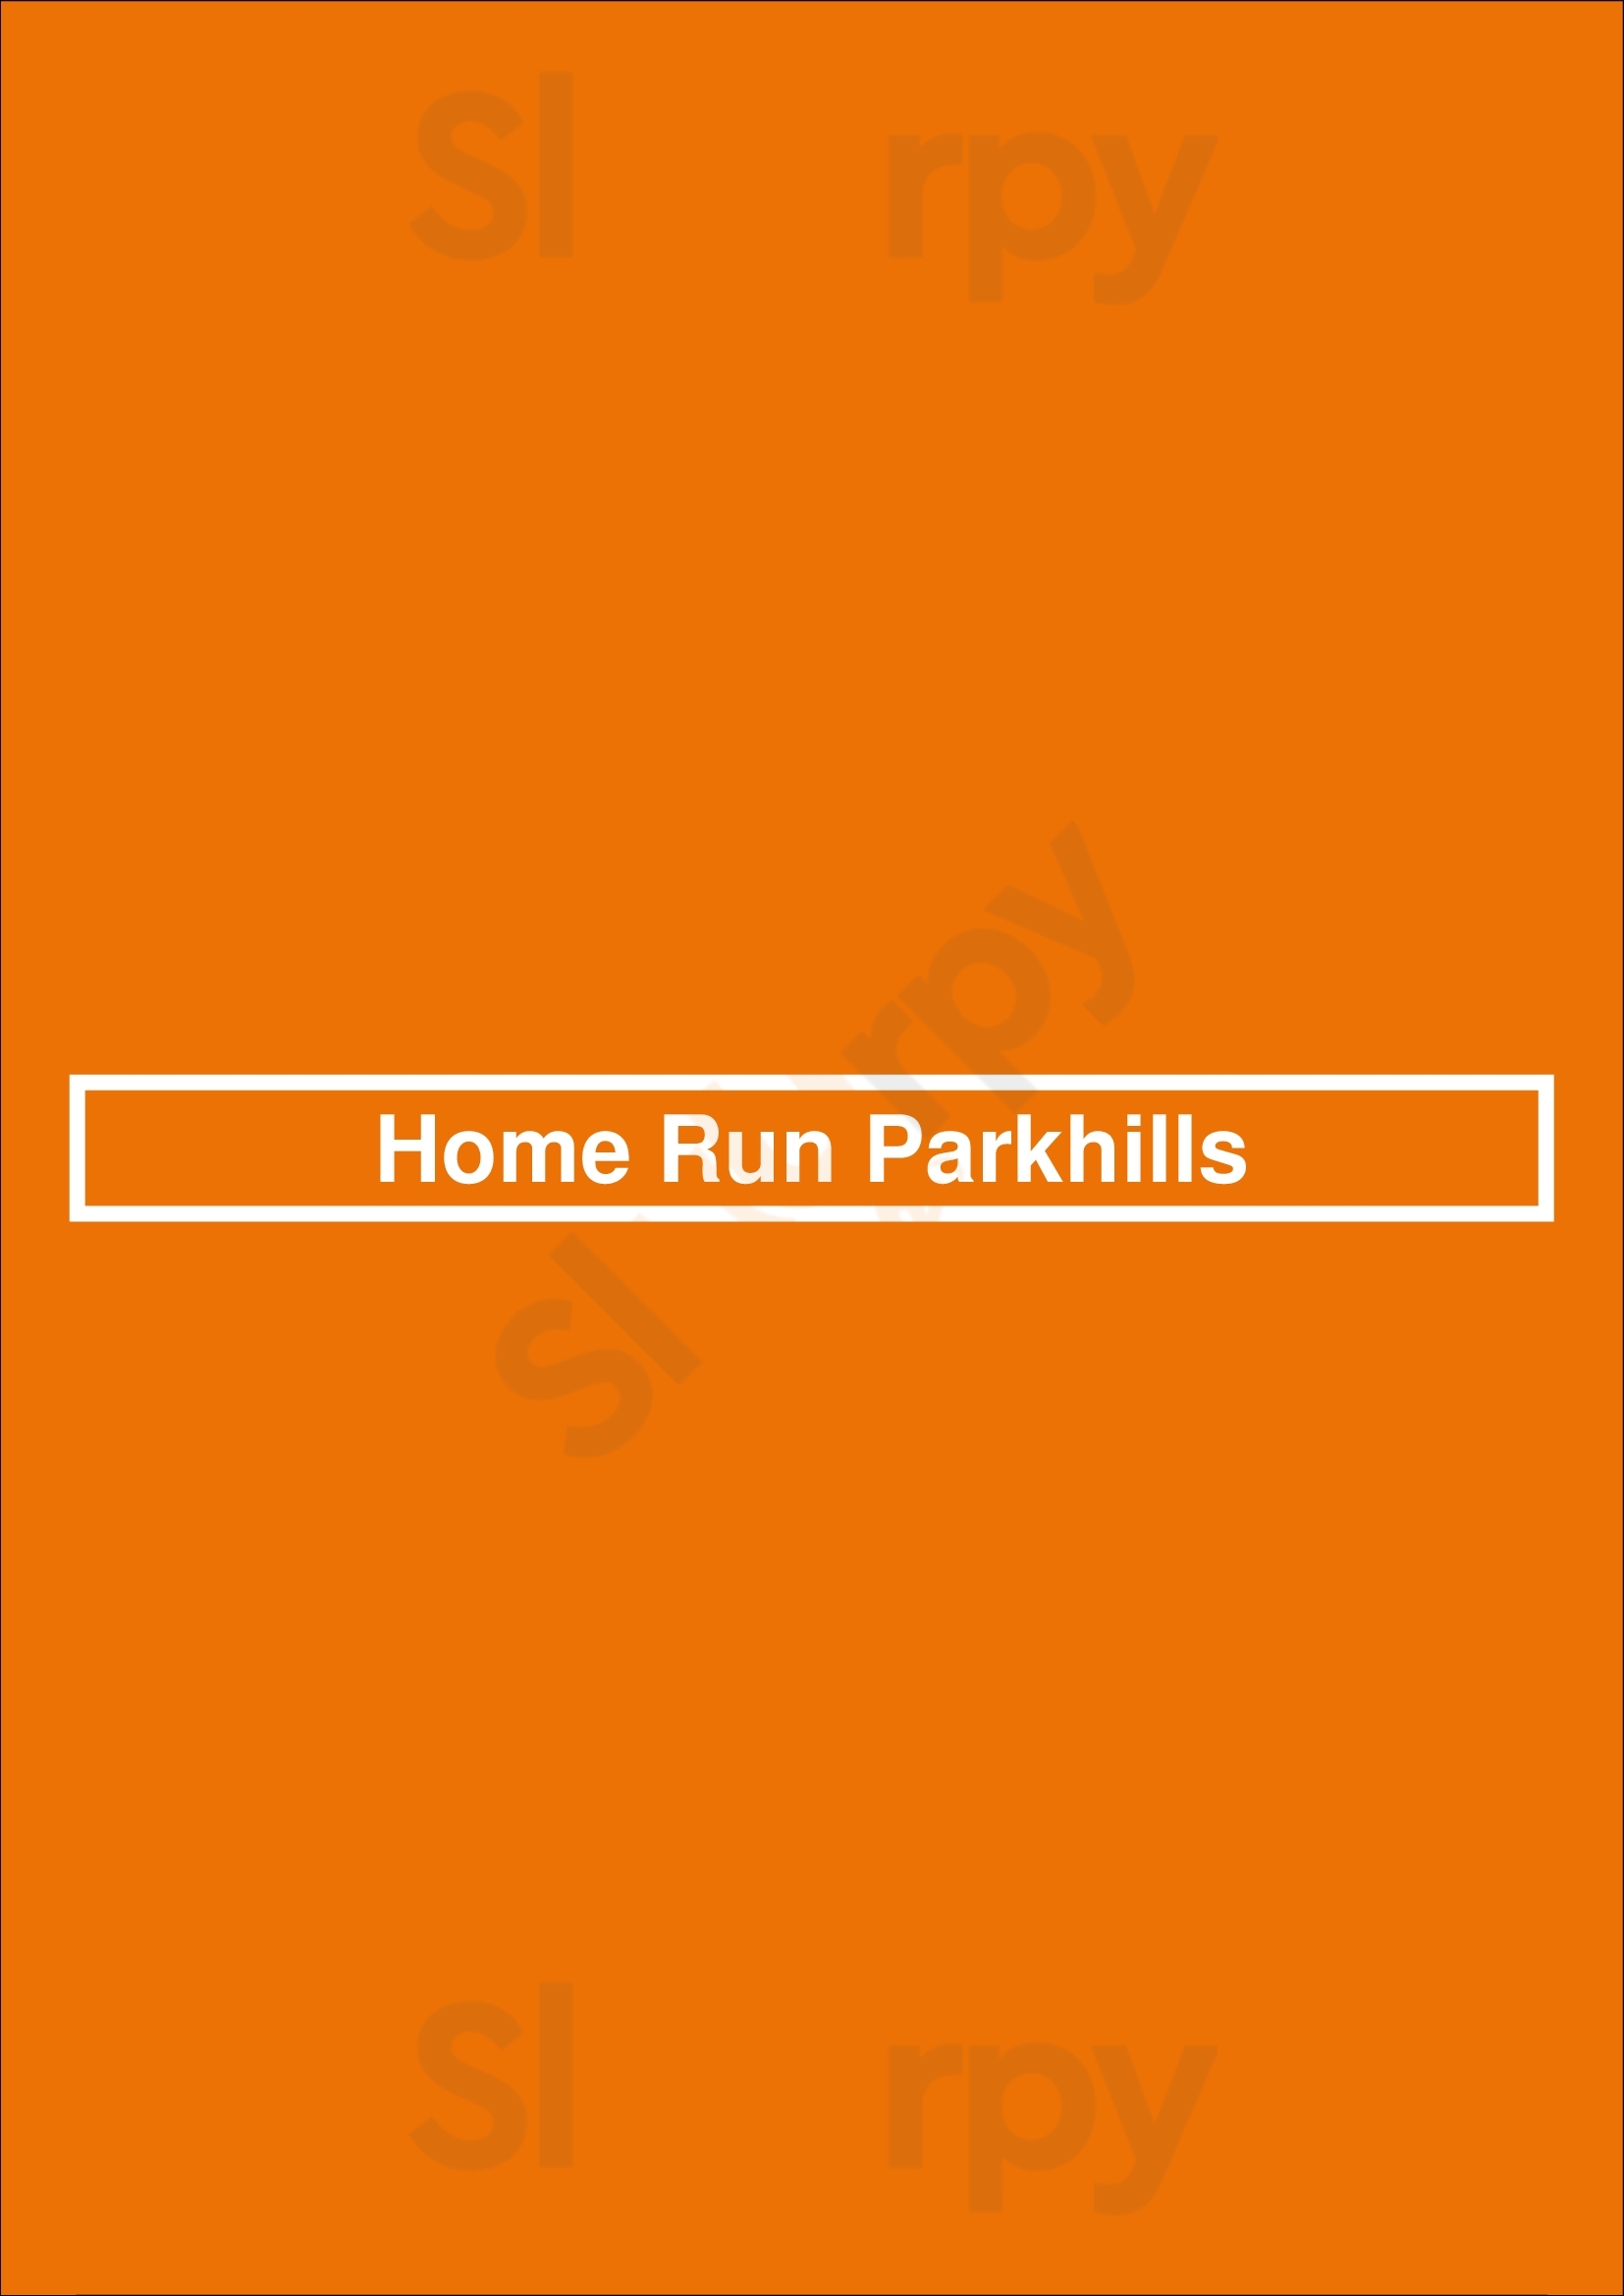 Home Run - Parkhills Bury Menu - 1